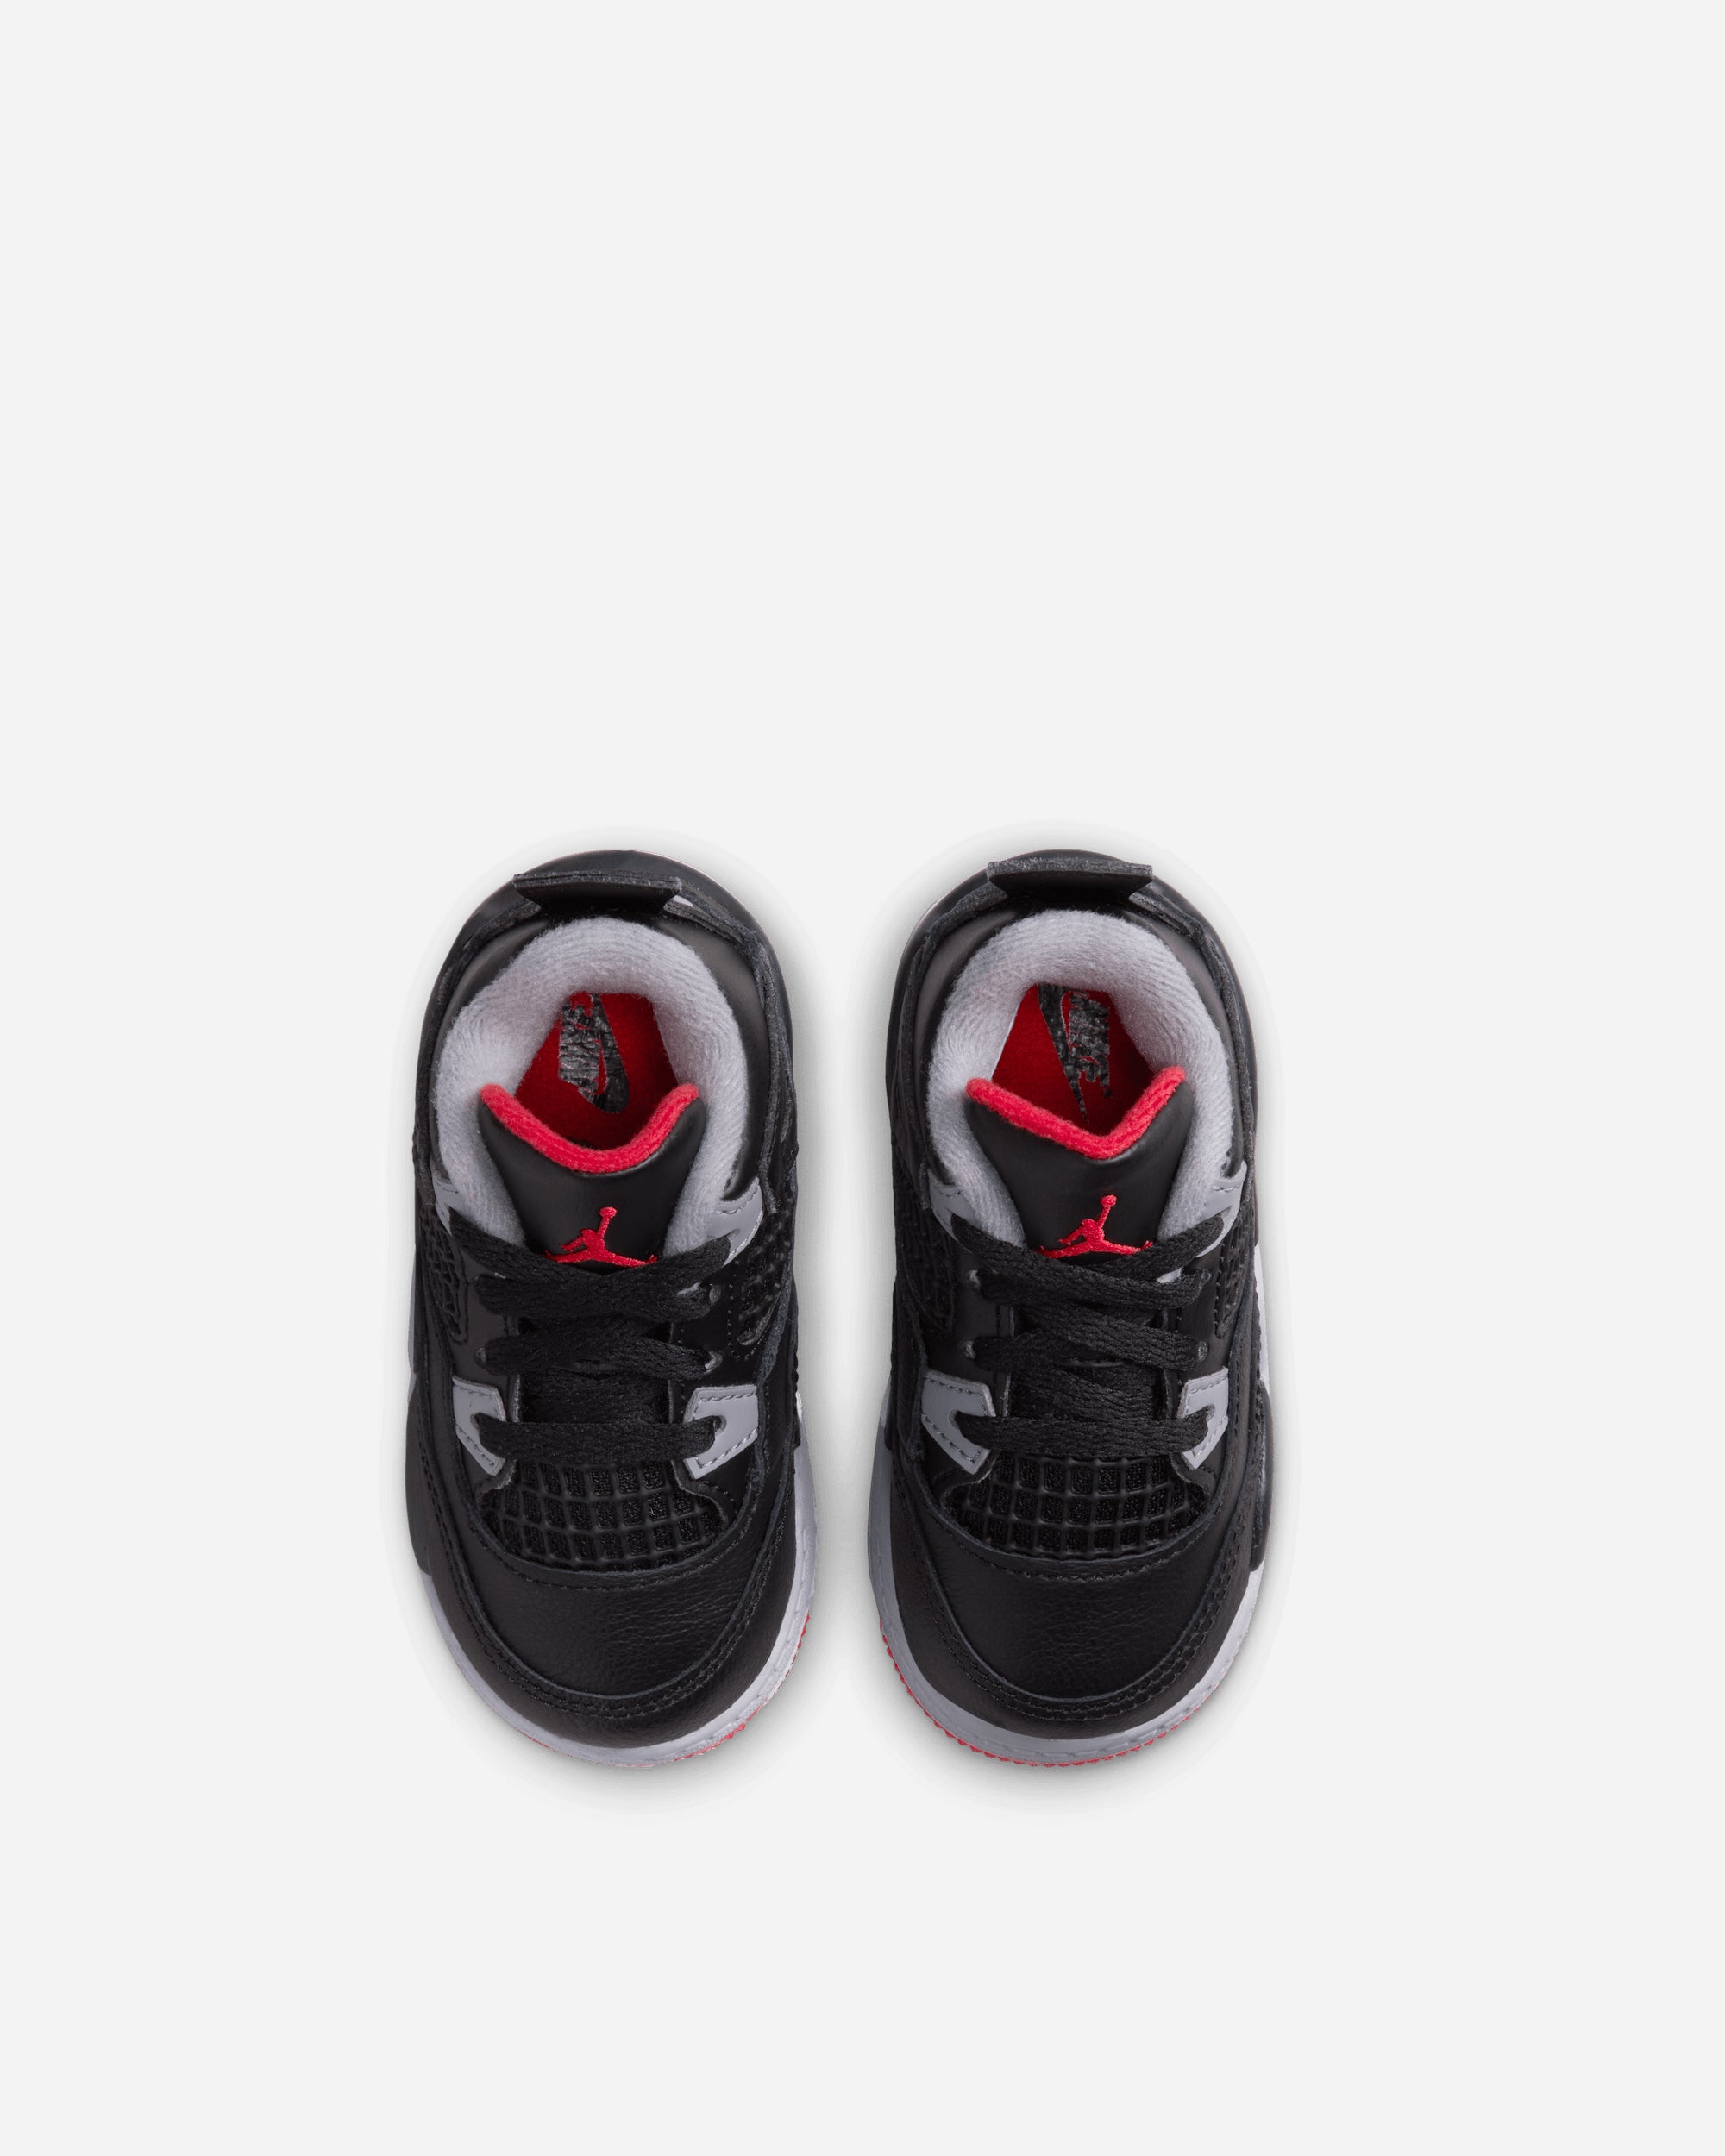 Jordan Brand Jordan 4 Retro 'Bred Reimagined' (Preschool) BLACK/FIRE RED-CEMENT GREY BQ7670-006